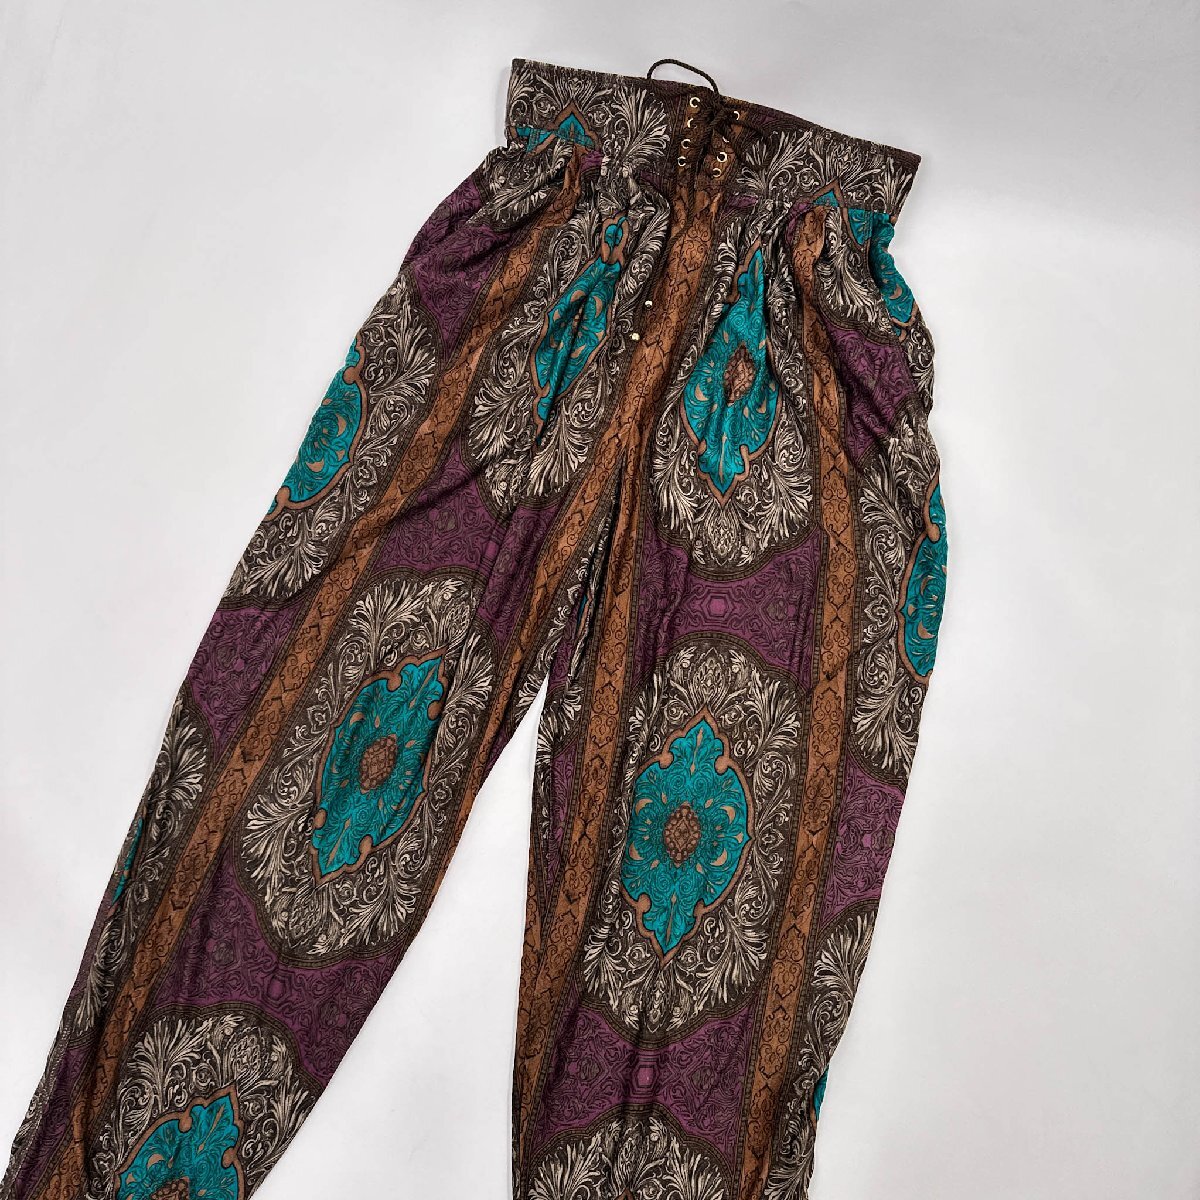  Italiya ita задний высокий талия общий рисунок Asian плетеный вверх легкий брюки низ Thai брюки тонкий нейлон 13/ женский 